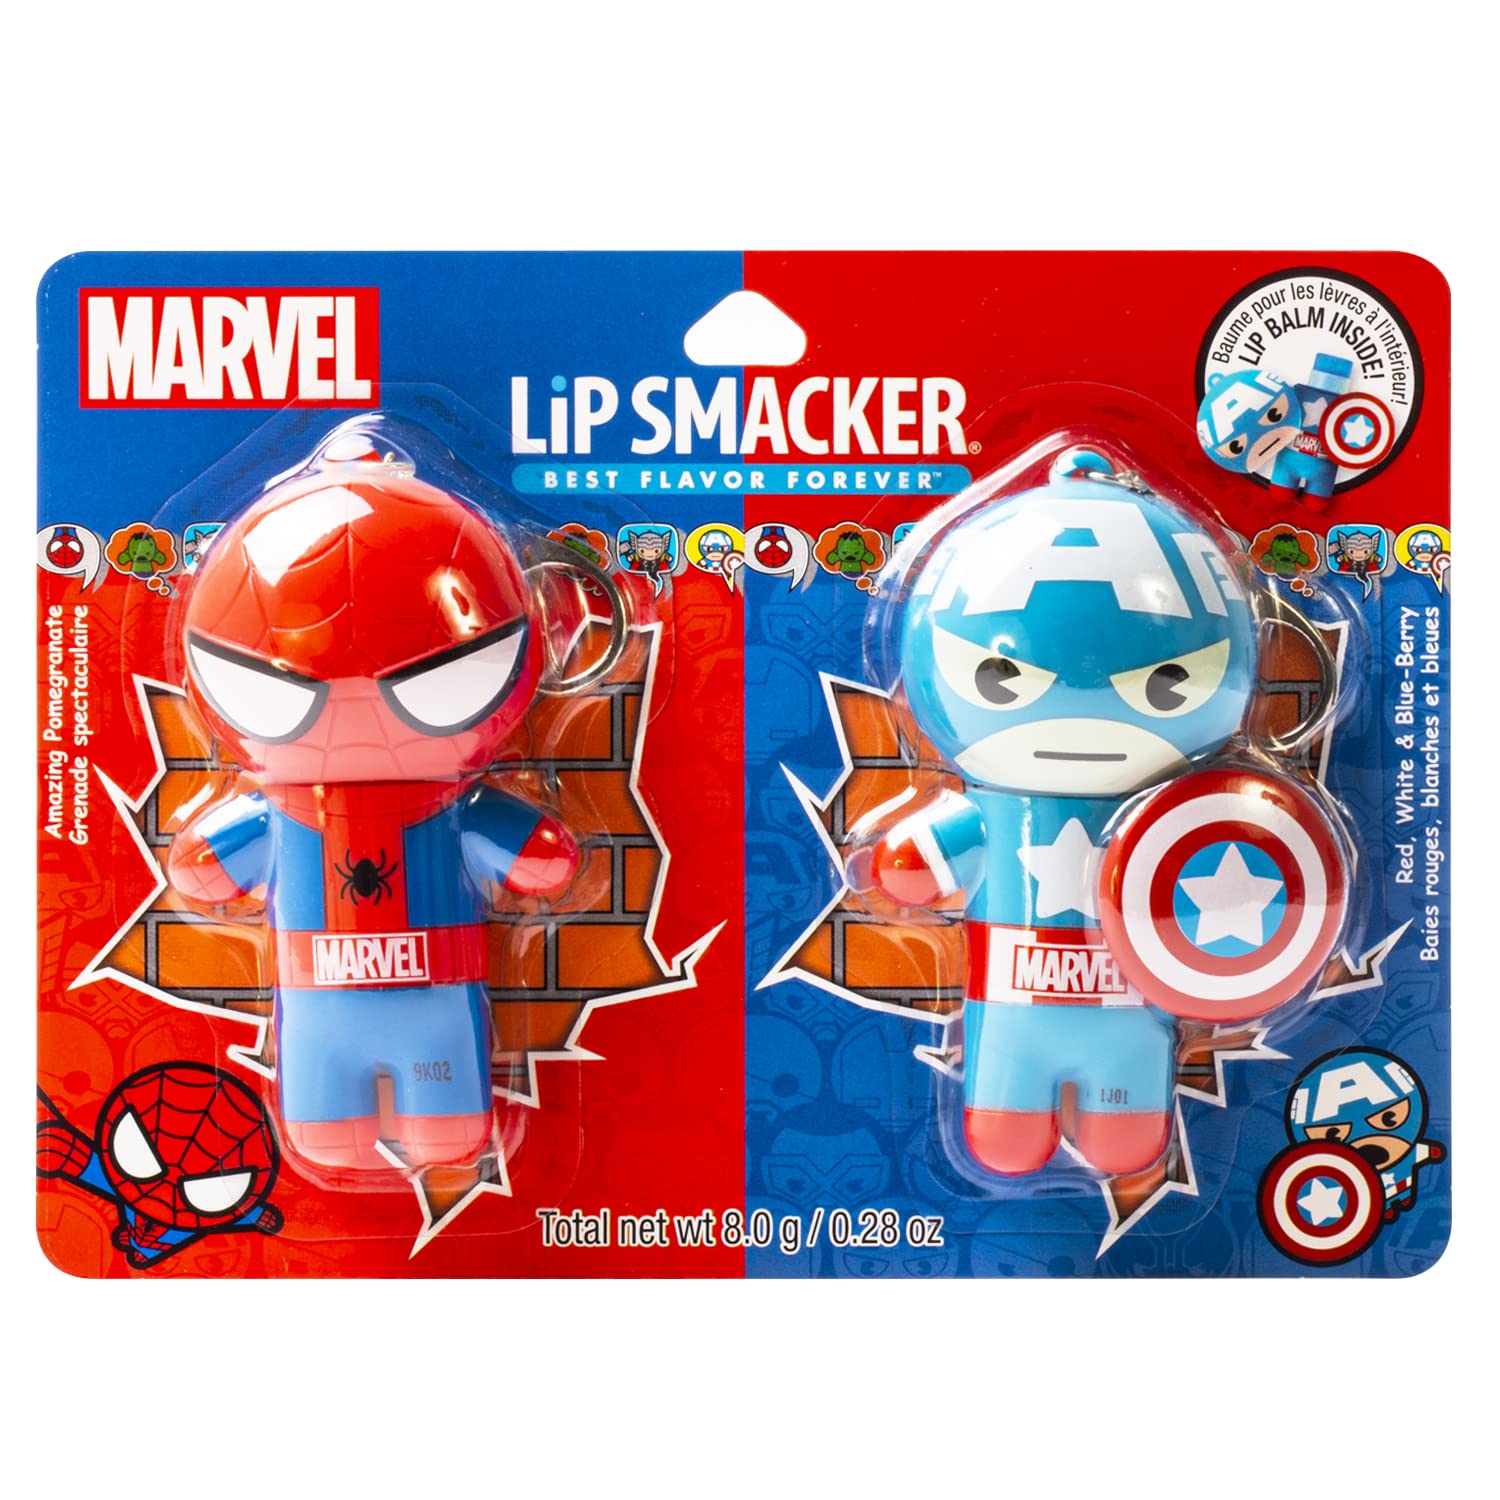 Lip Smacker Marvel, keychain, lip balm for kids - Spiderman & Captain America : Beauty & Personal Care